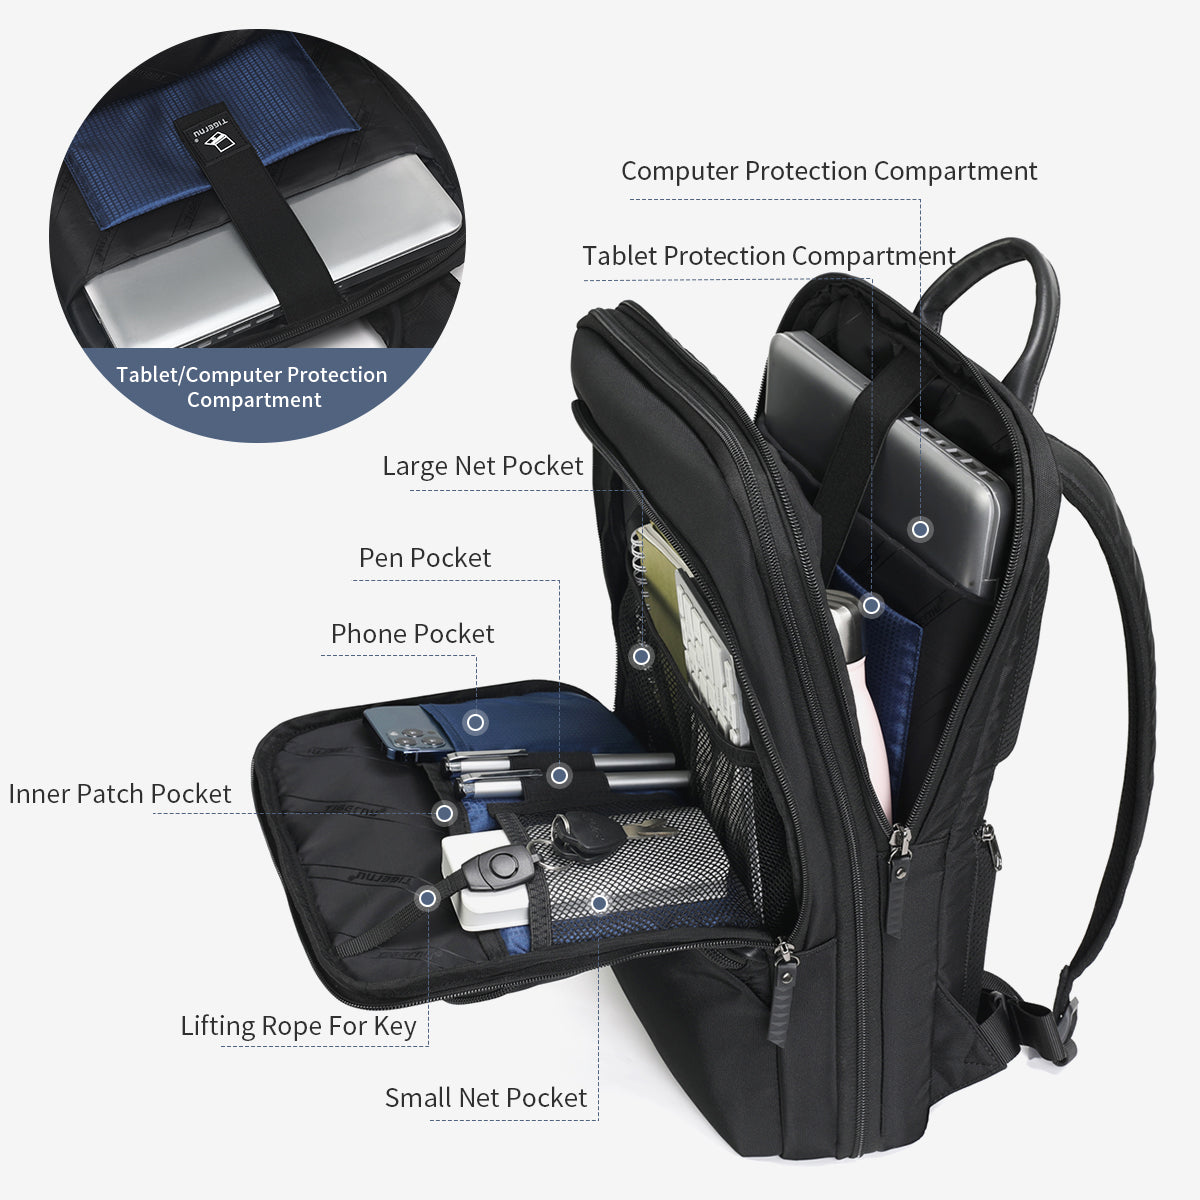 Lifetime warranty, expandable men's backpack, ultra-thin travel backpack, men's waterproof laptop bag 15.6 inches, men's Mozilla bag